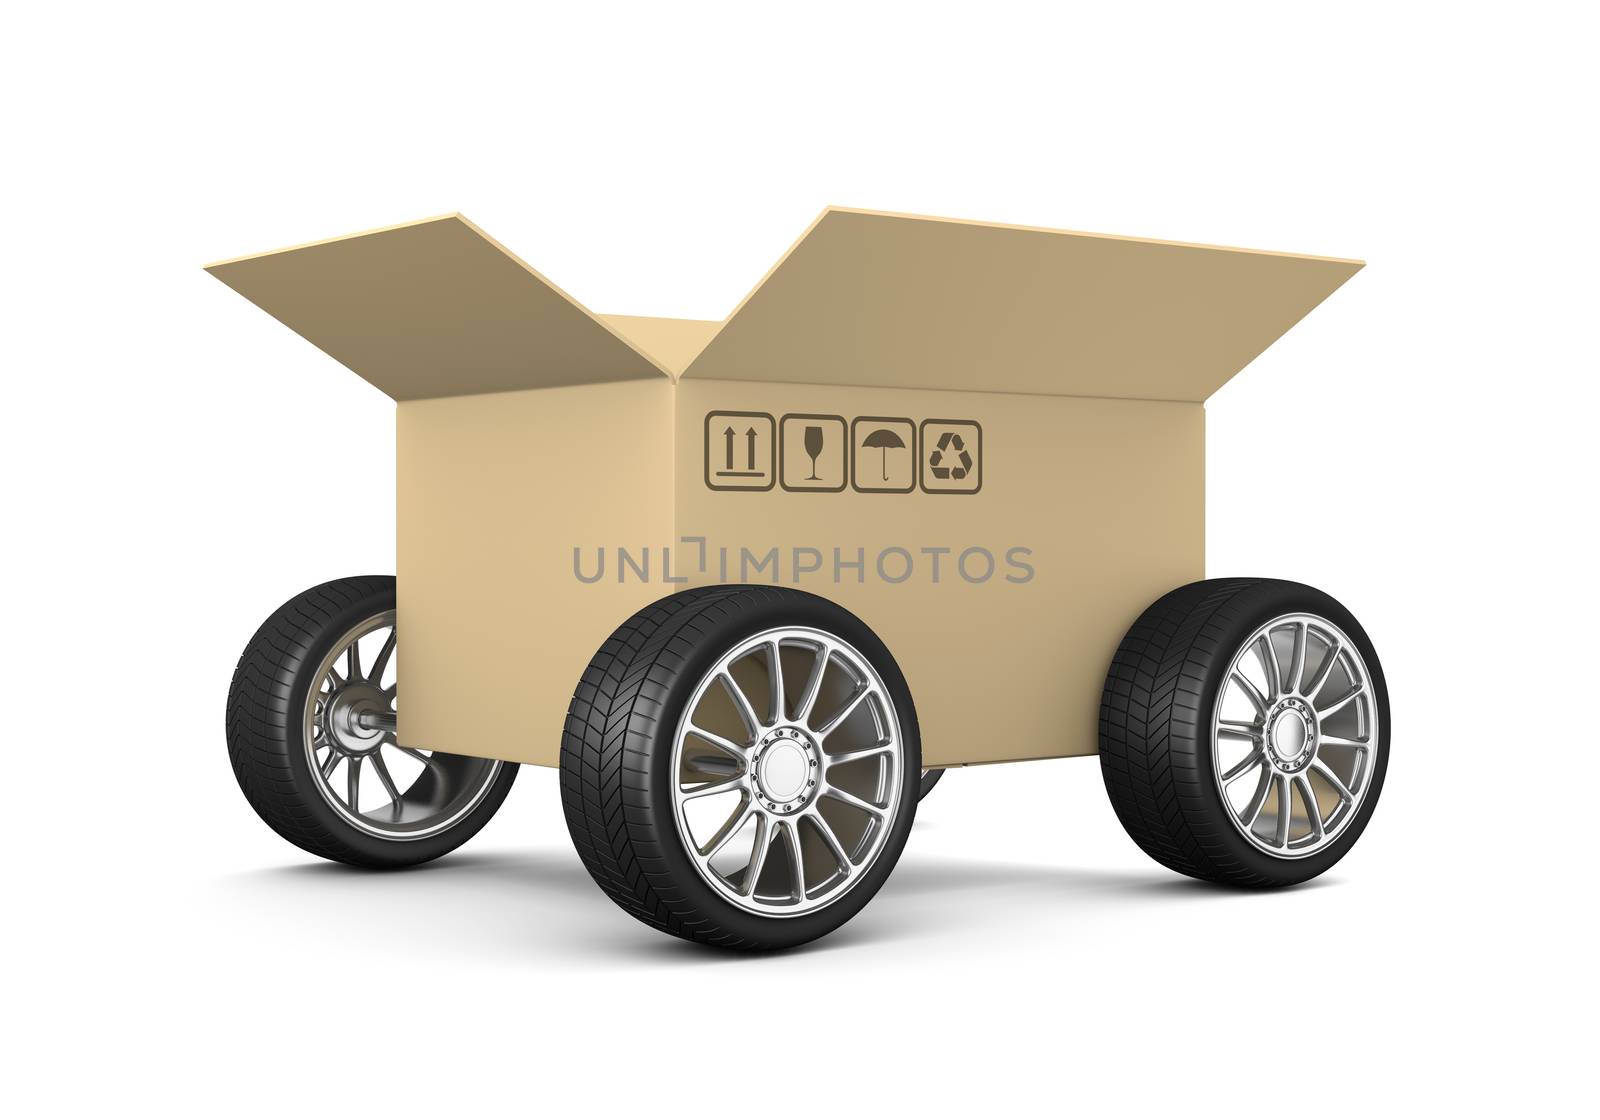 Cardboard Box on Wheels by make